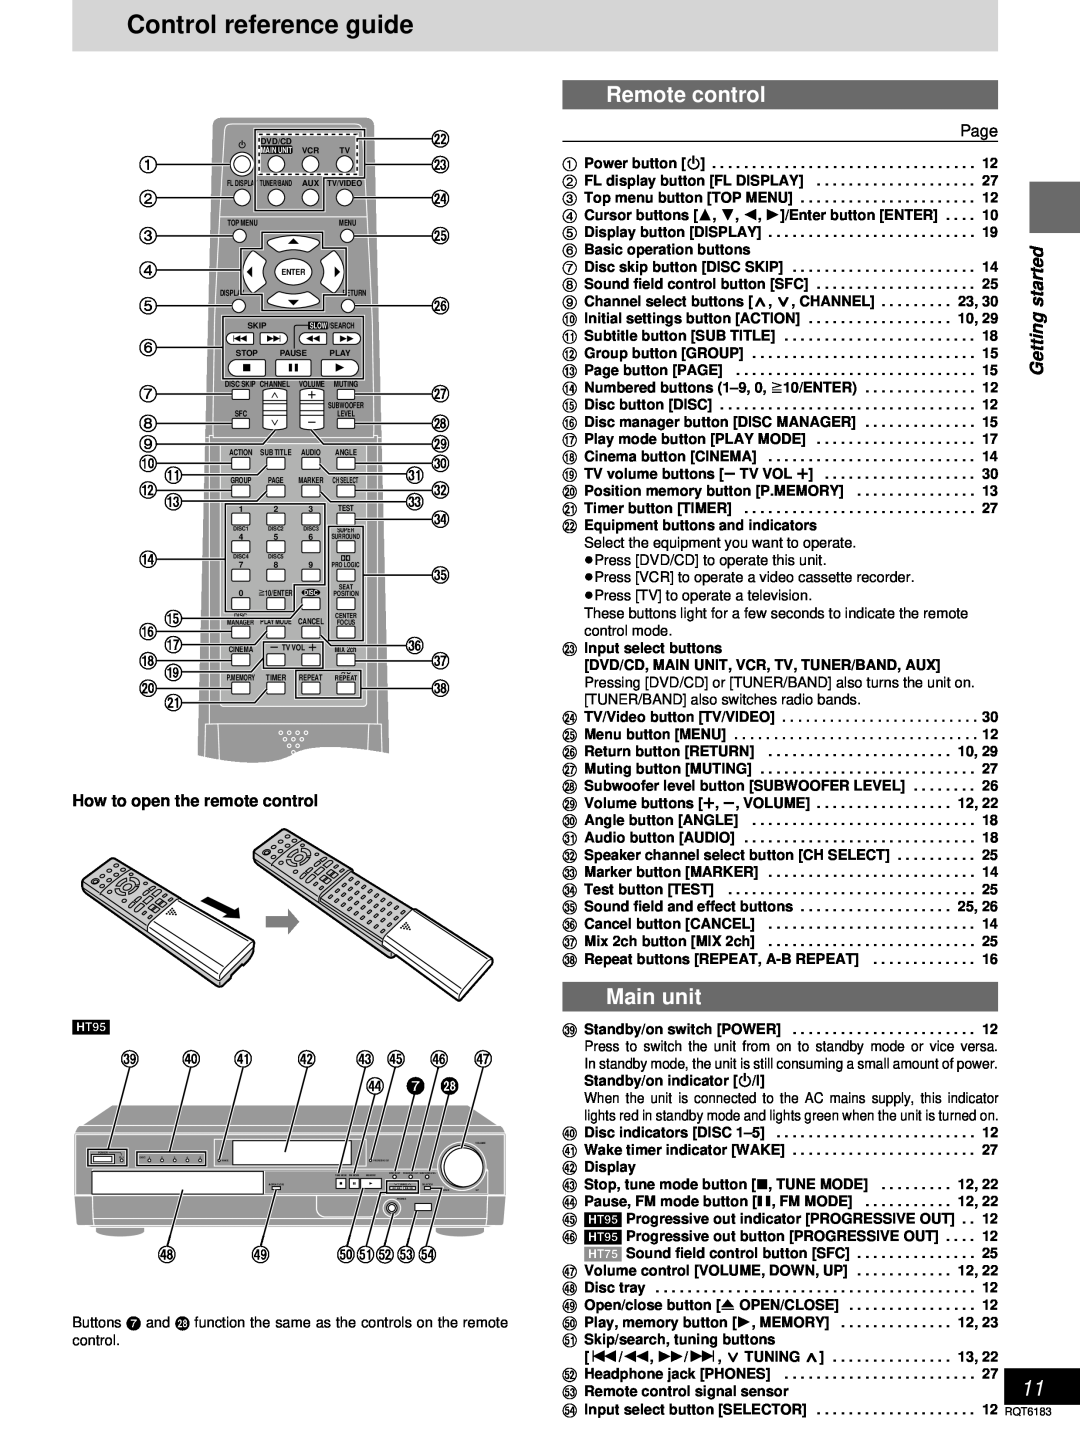 Panasonic SC-HT75, SC-HT95 warranty Control reference guide, Remote control, Main unit, 7 L 